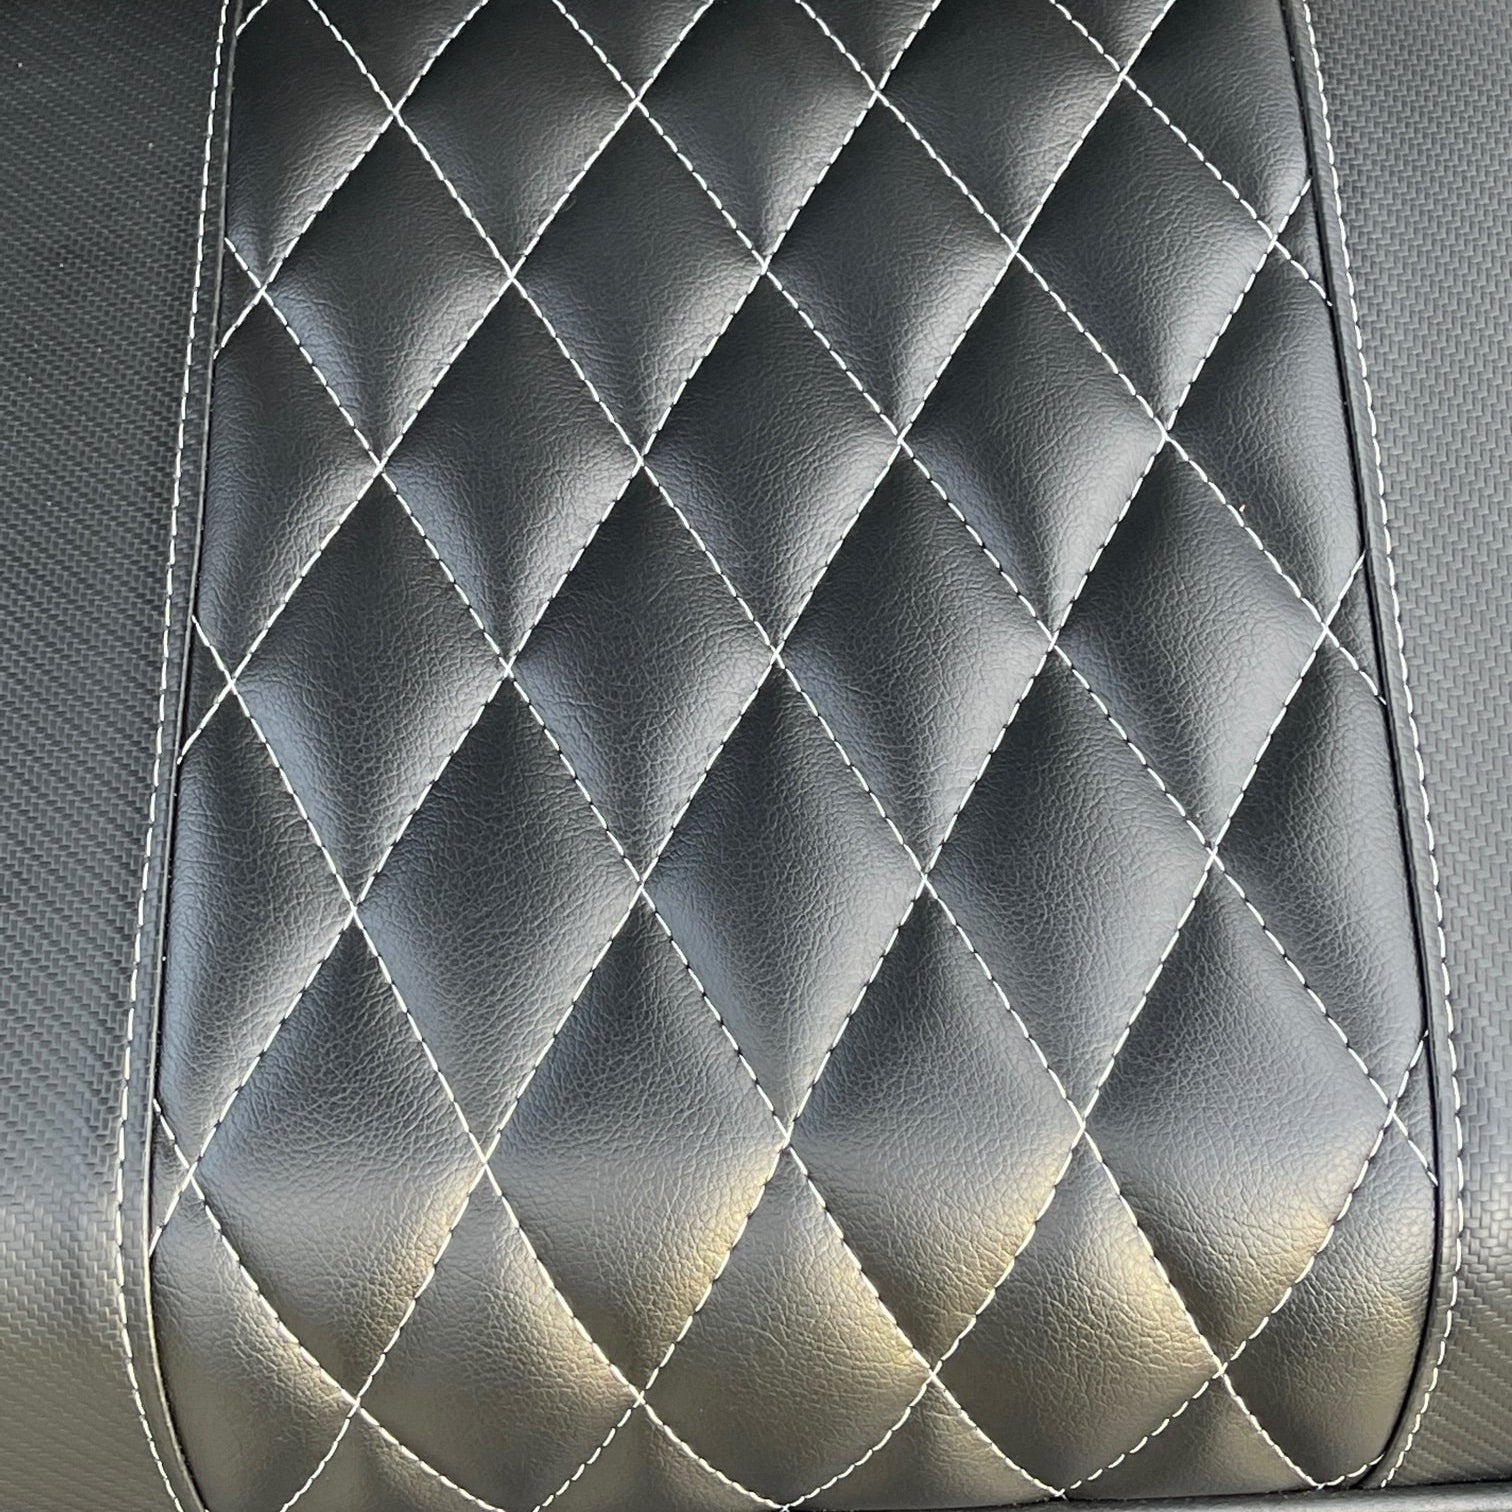 EZ GO TXT 4 Passenger Seat Covers - Carbon Fiber and Diamond Black with White Stitching